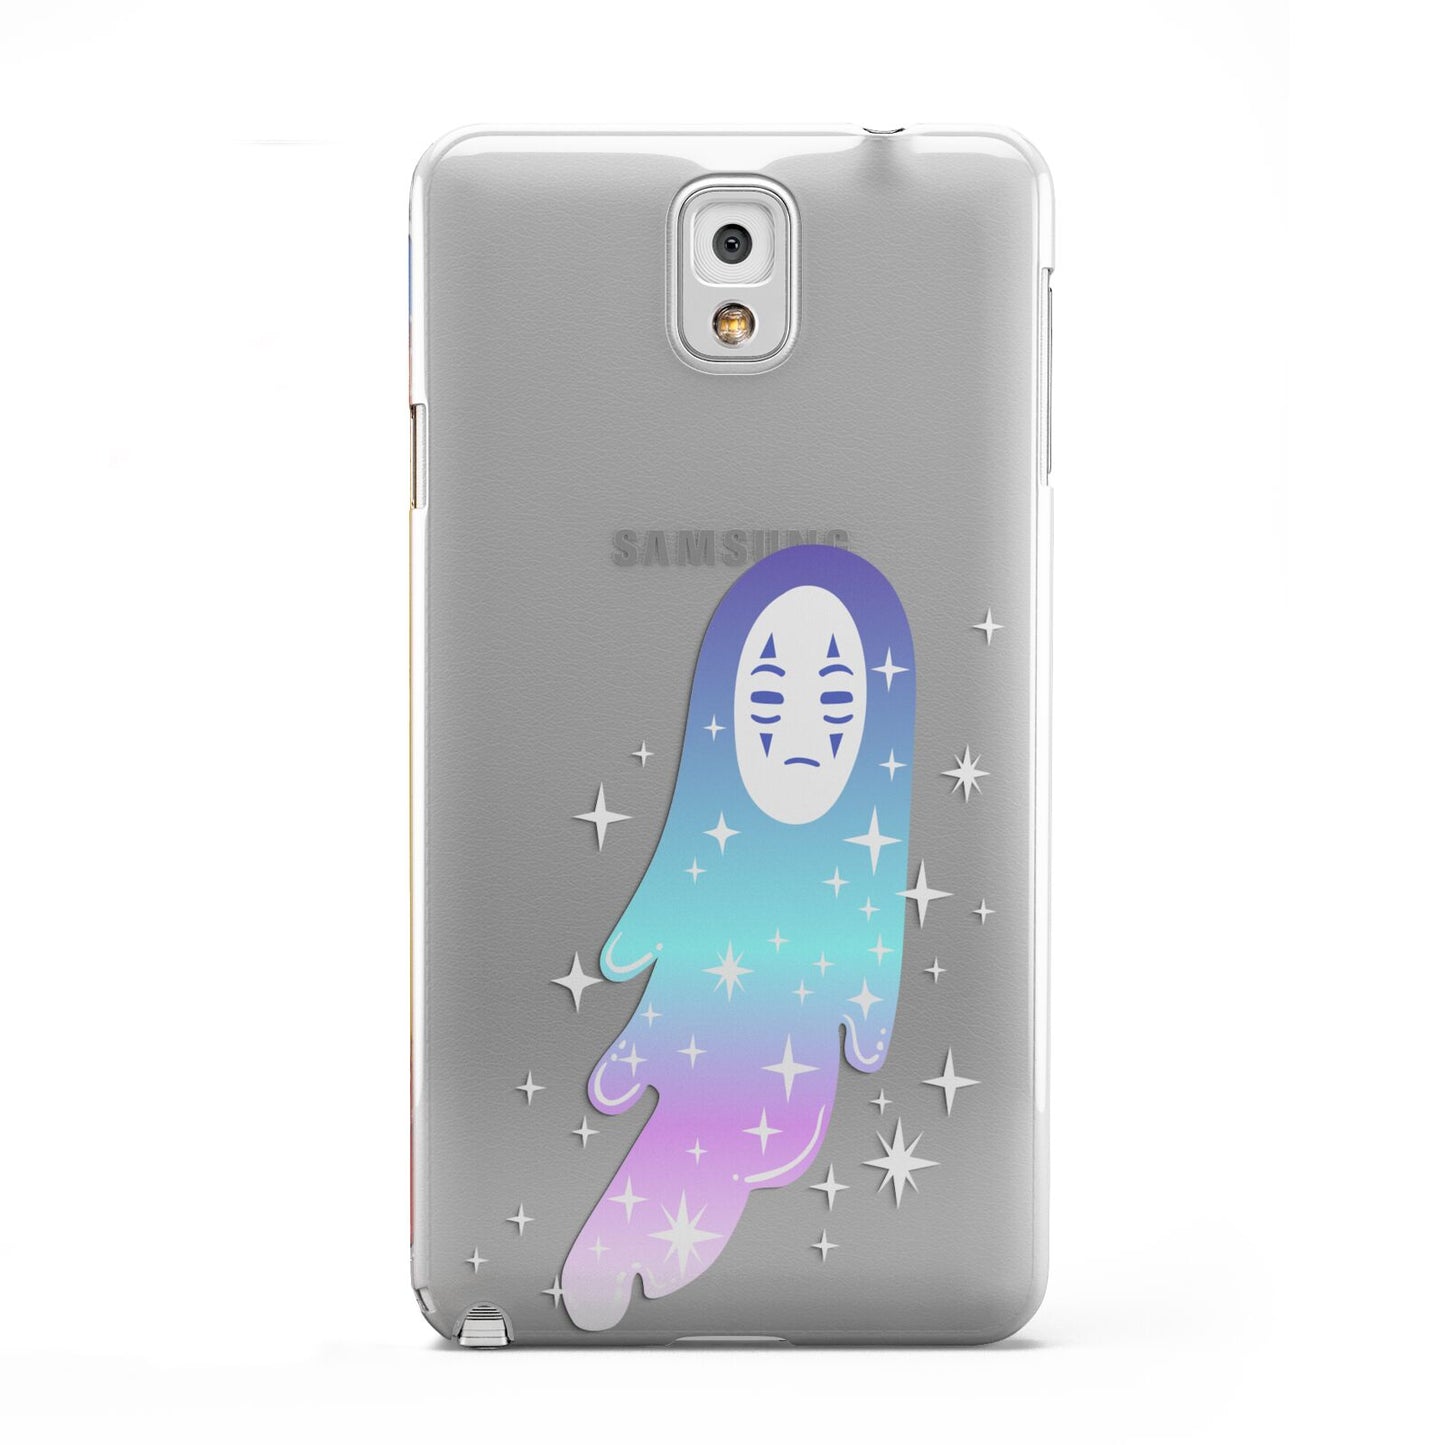 Starry Spectre Samsung Galaxy Note 3 Case